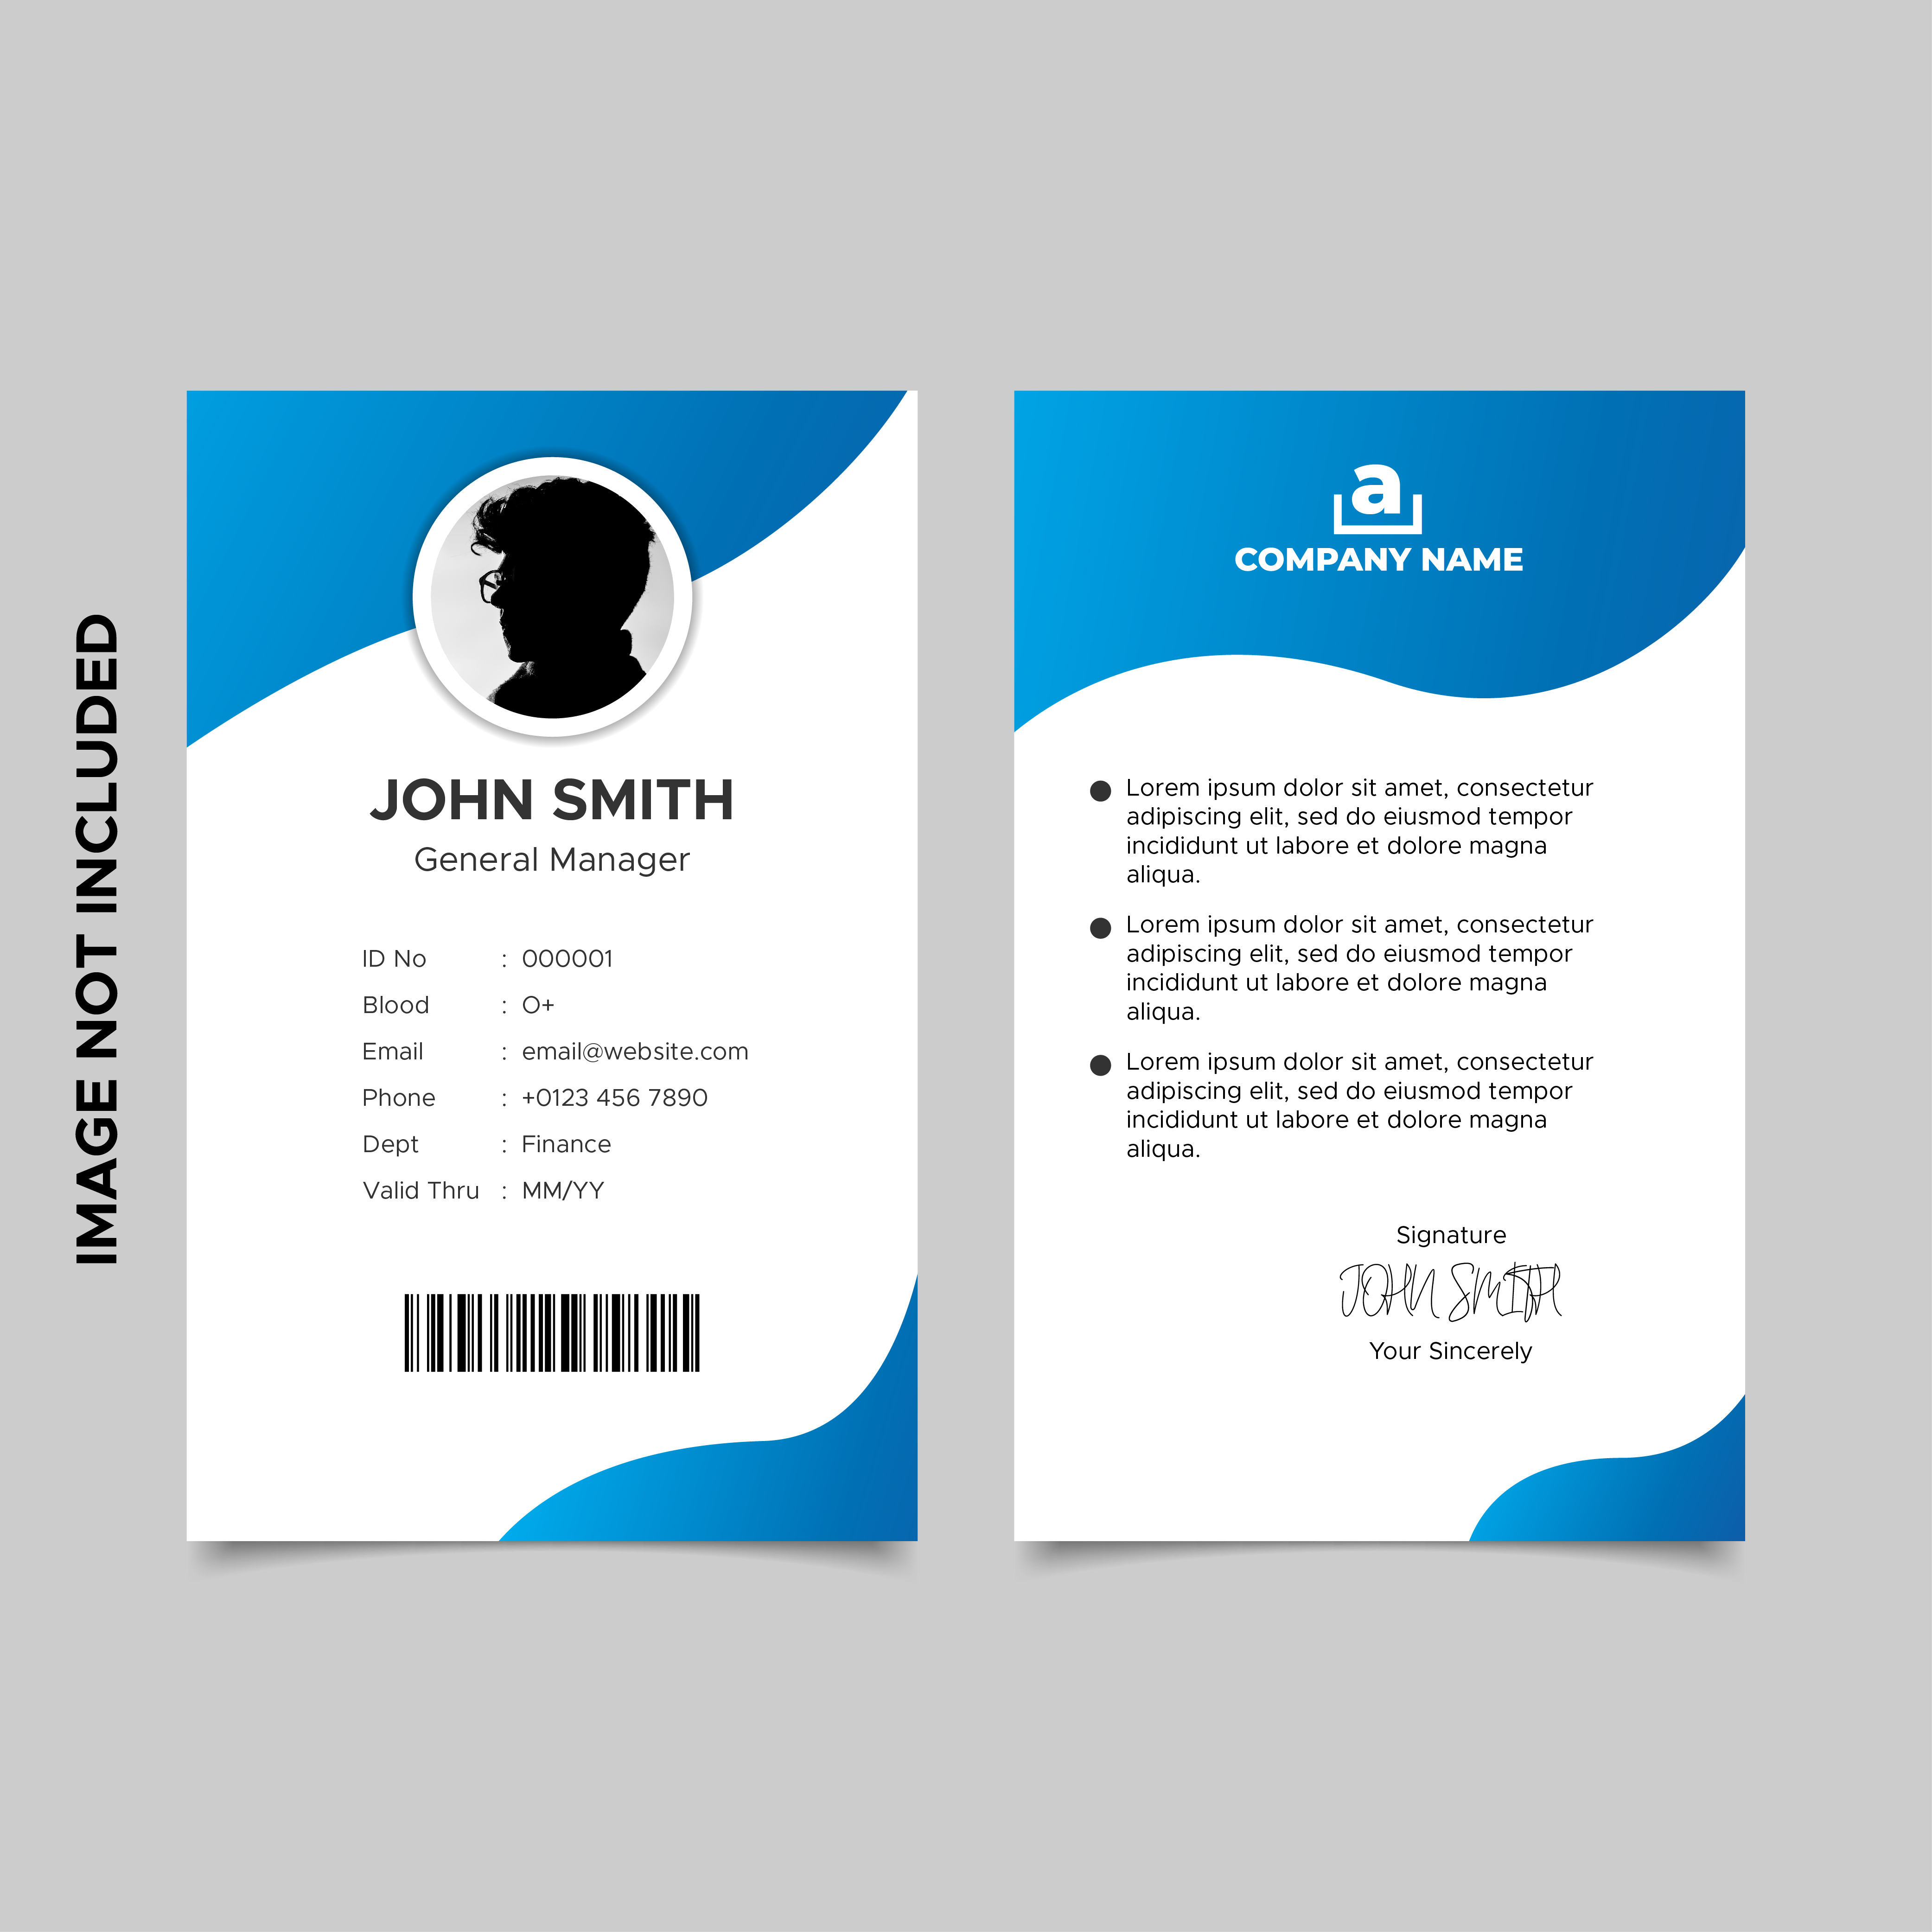 employee identification cards